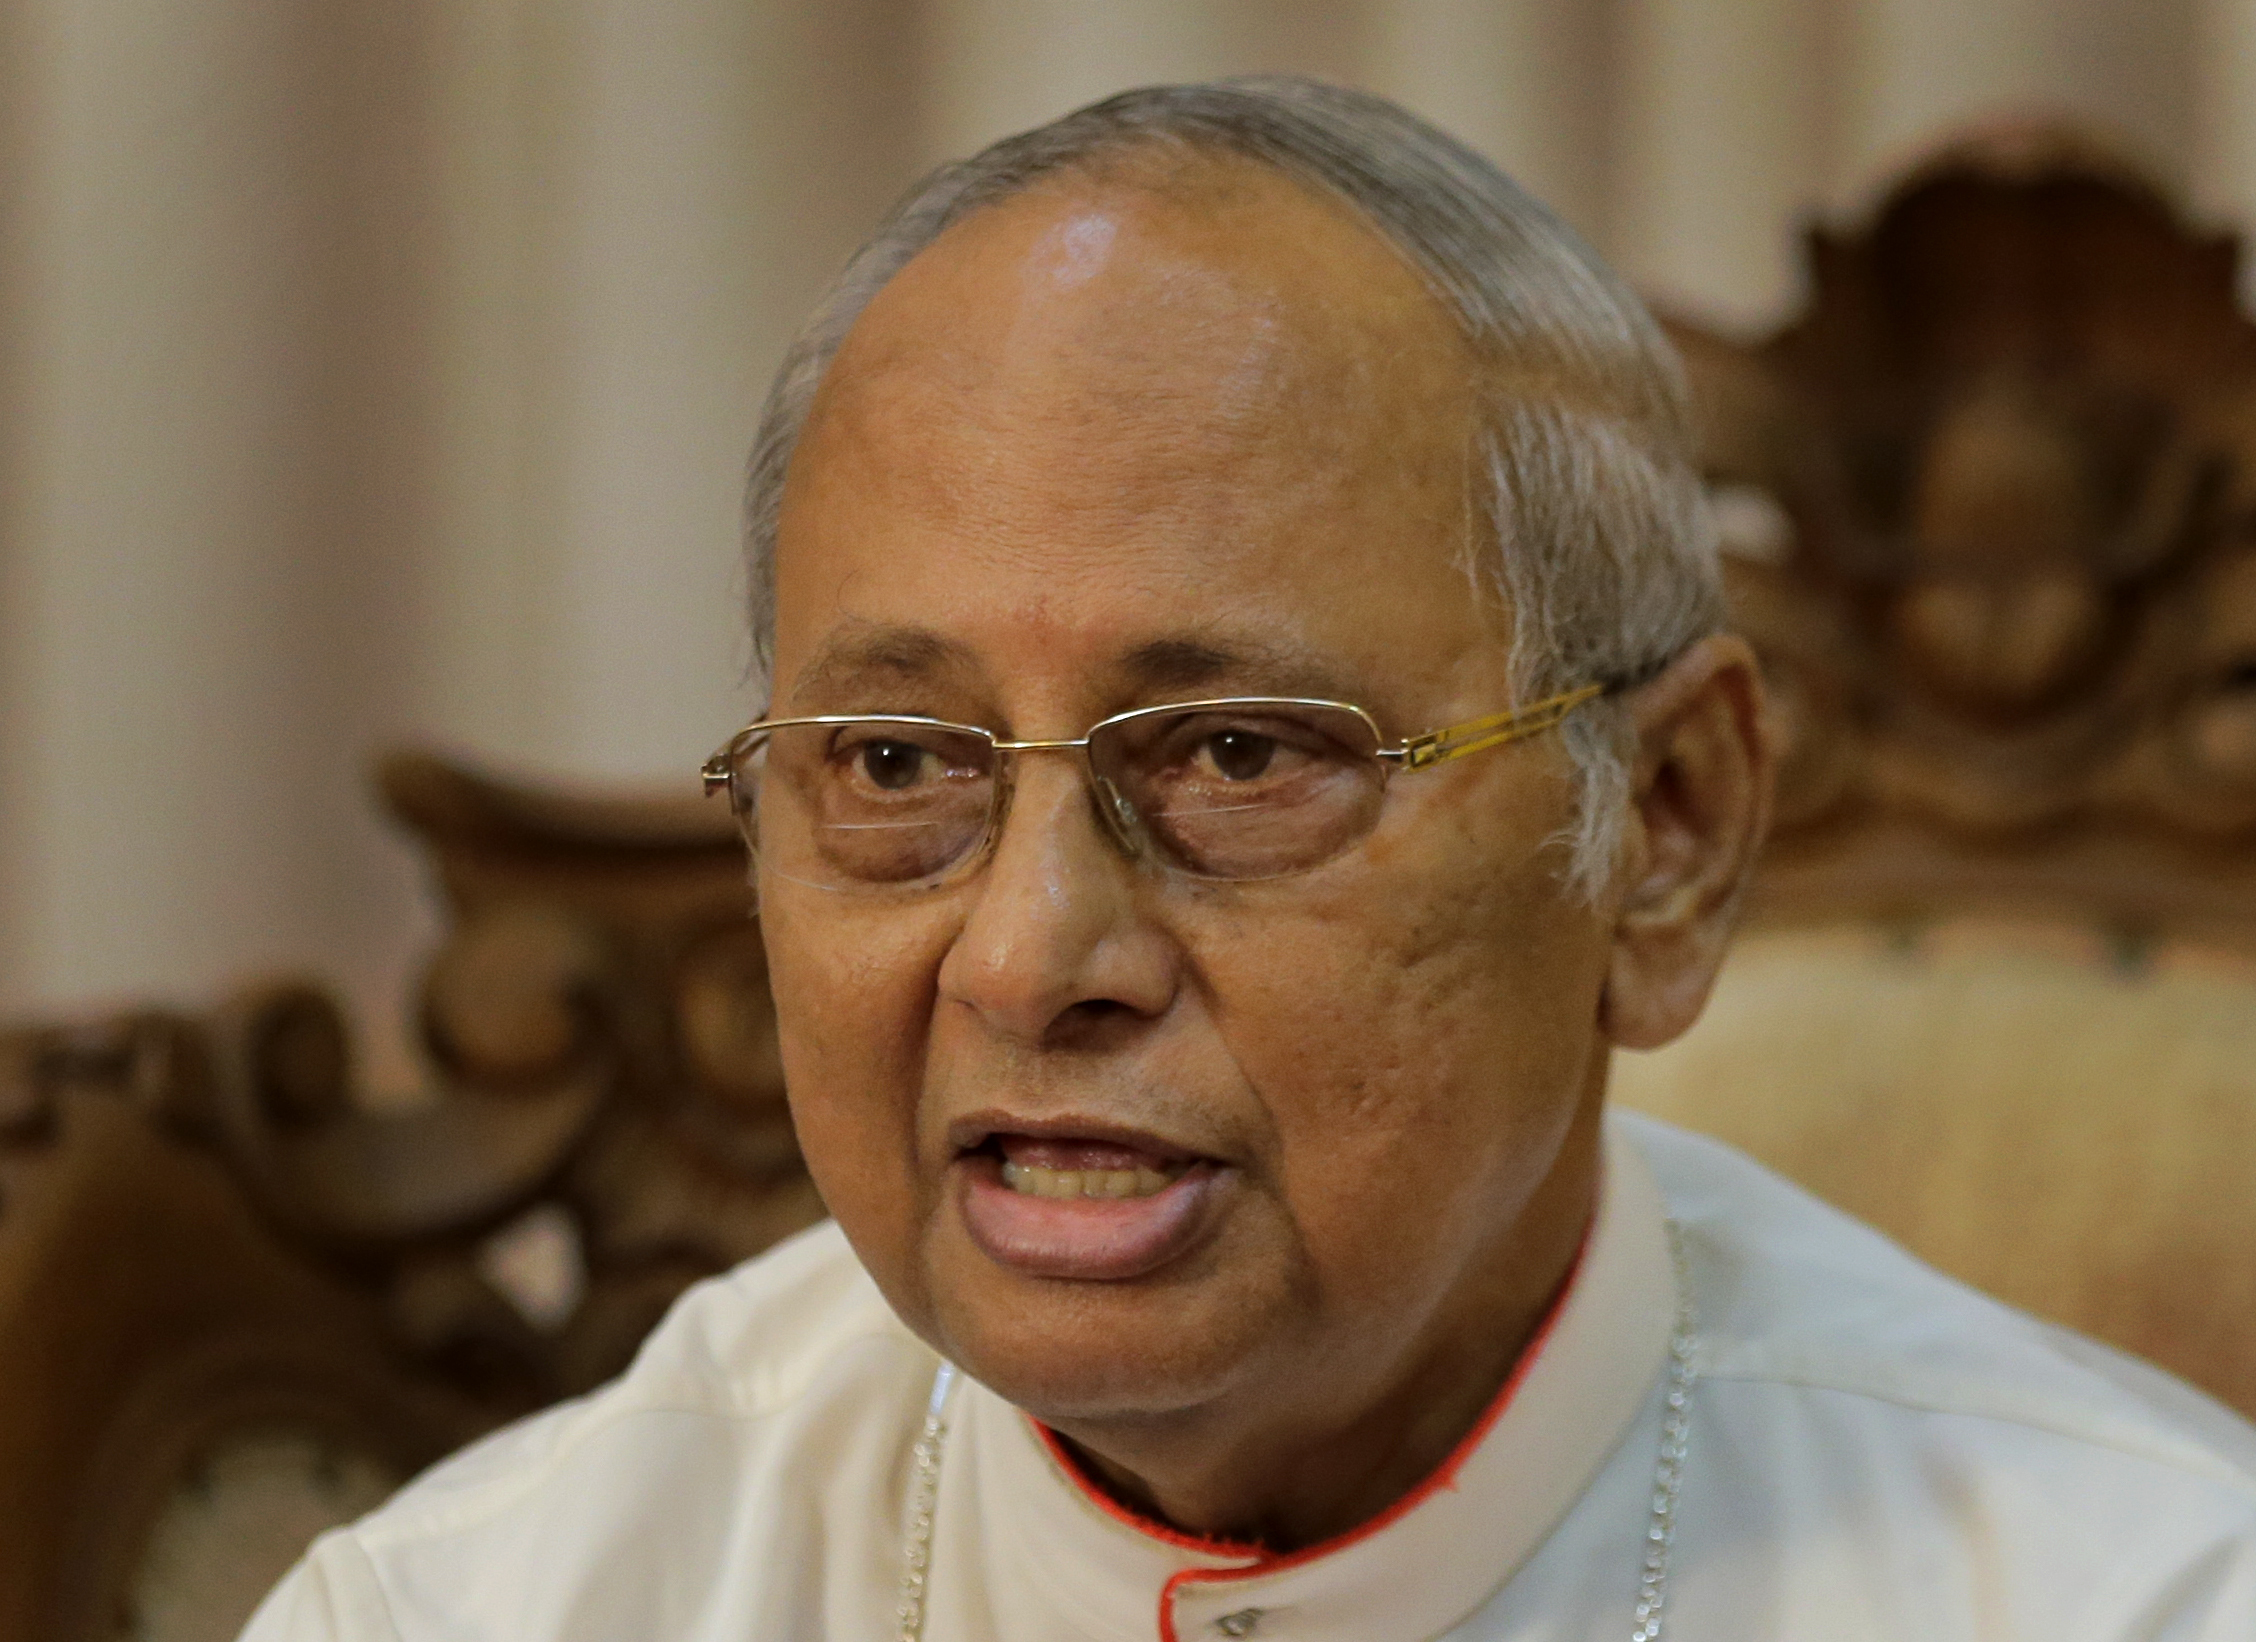 Utredning av påskdåden kritiseras av ärkebiskop